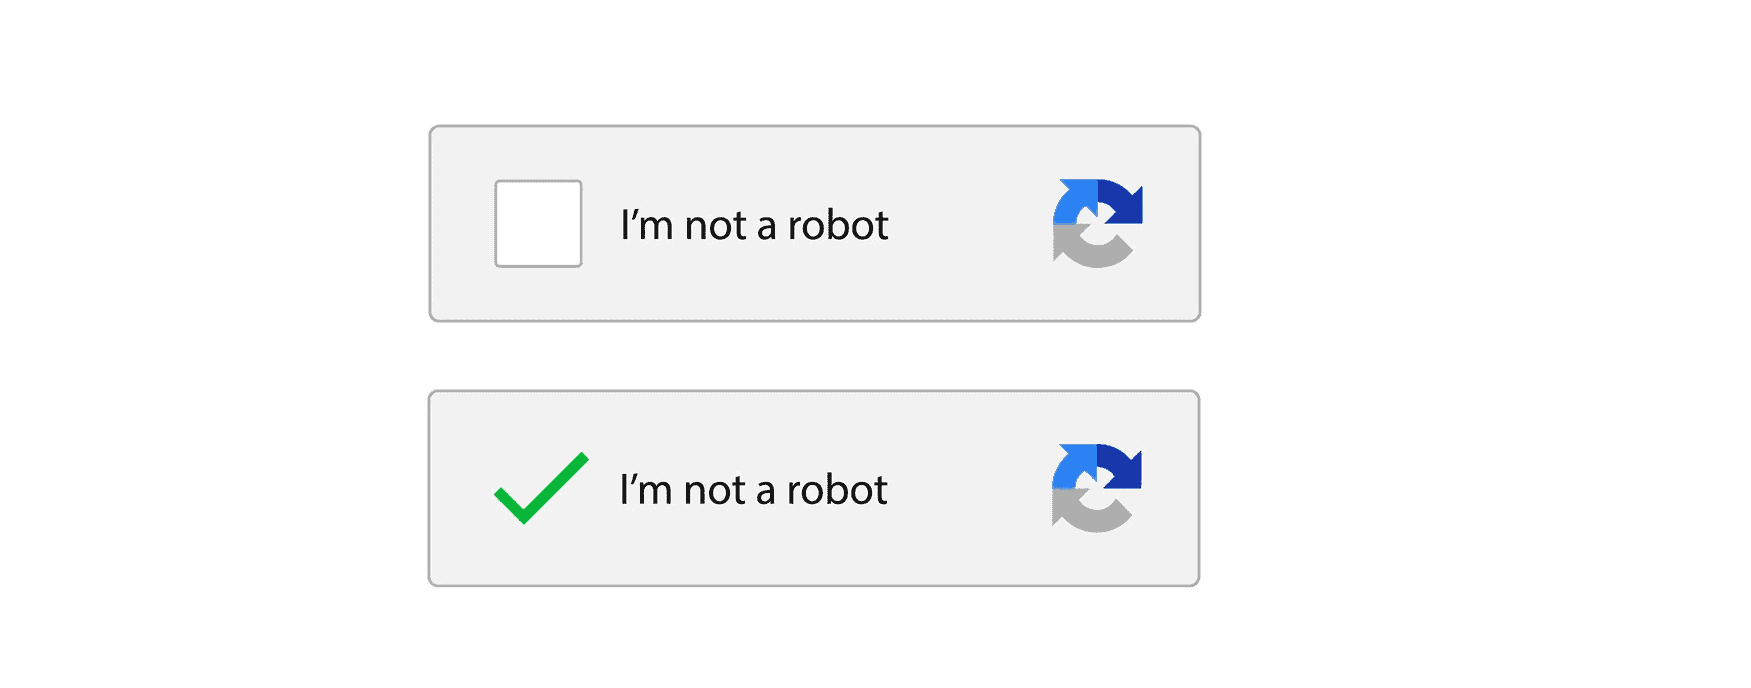 CAPTCHA challenge: I’m not a robot.